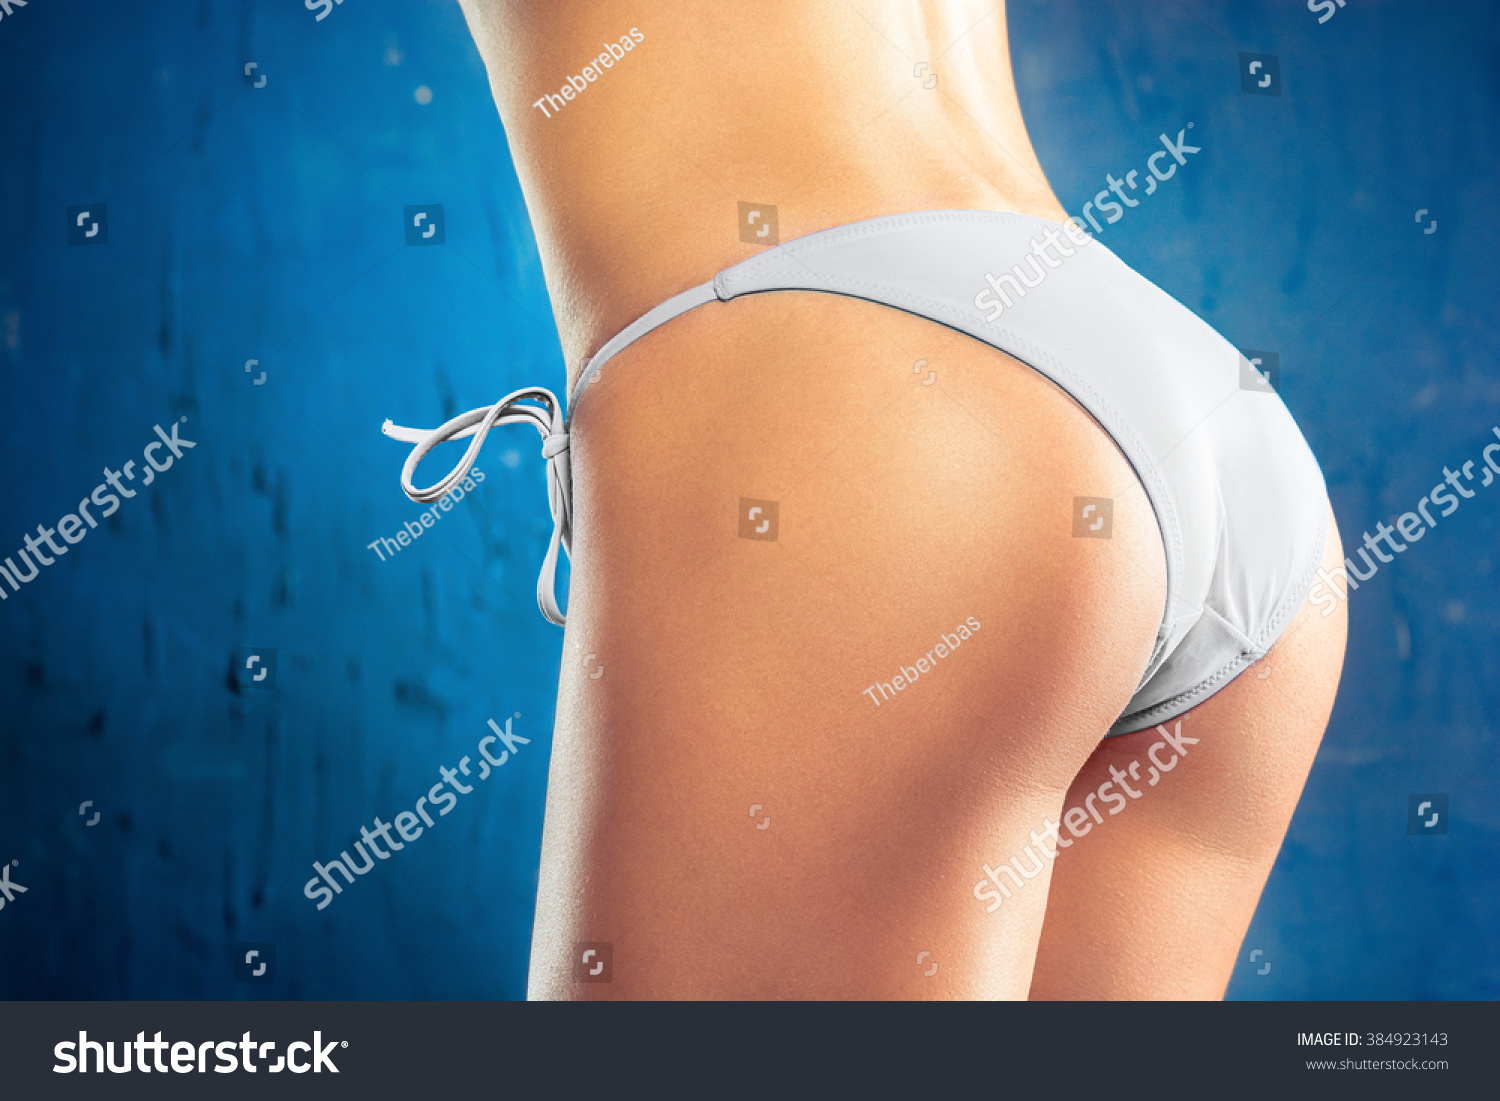 Girls Ass In Bikini